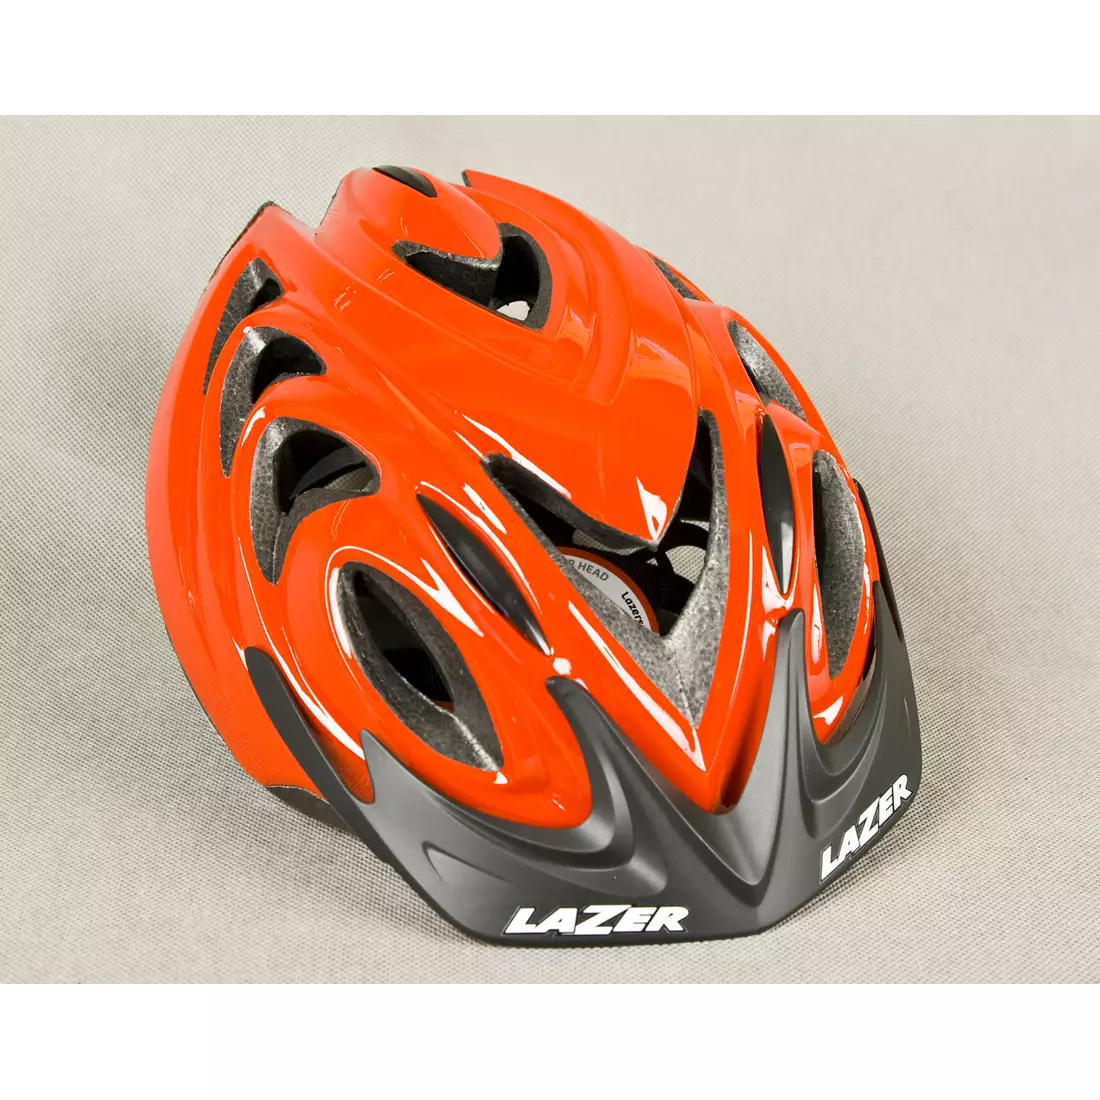 LAZER X3M MTB bicycle helmet, red